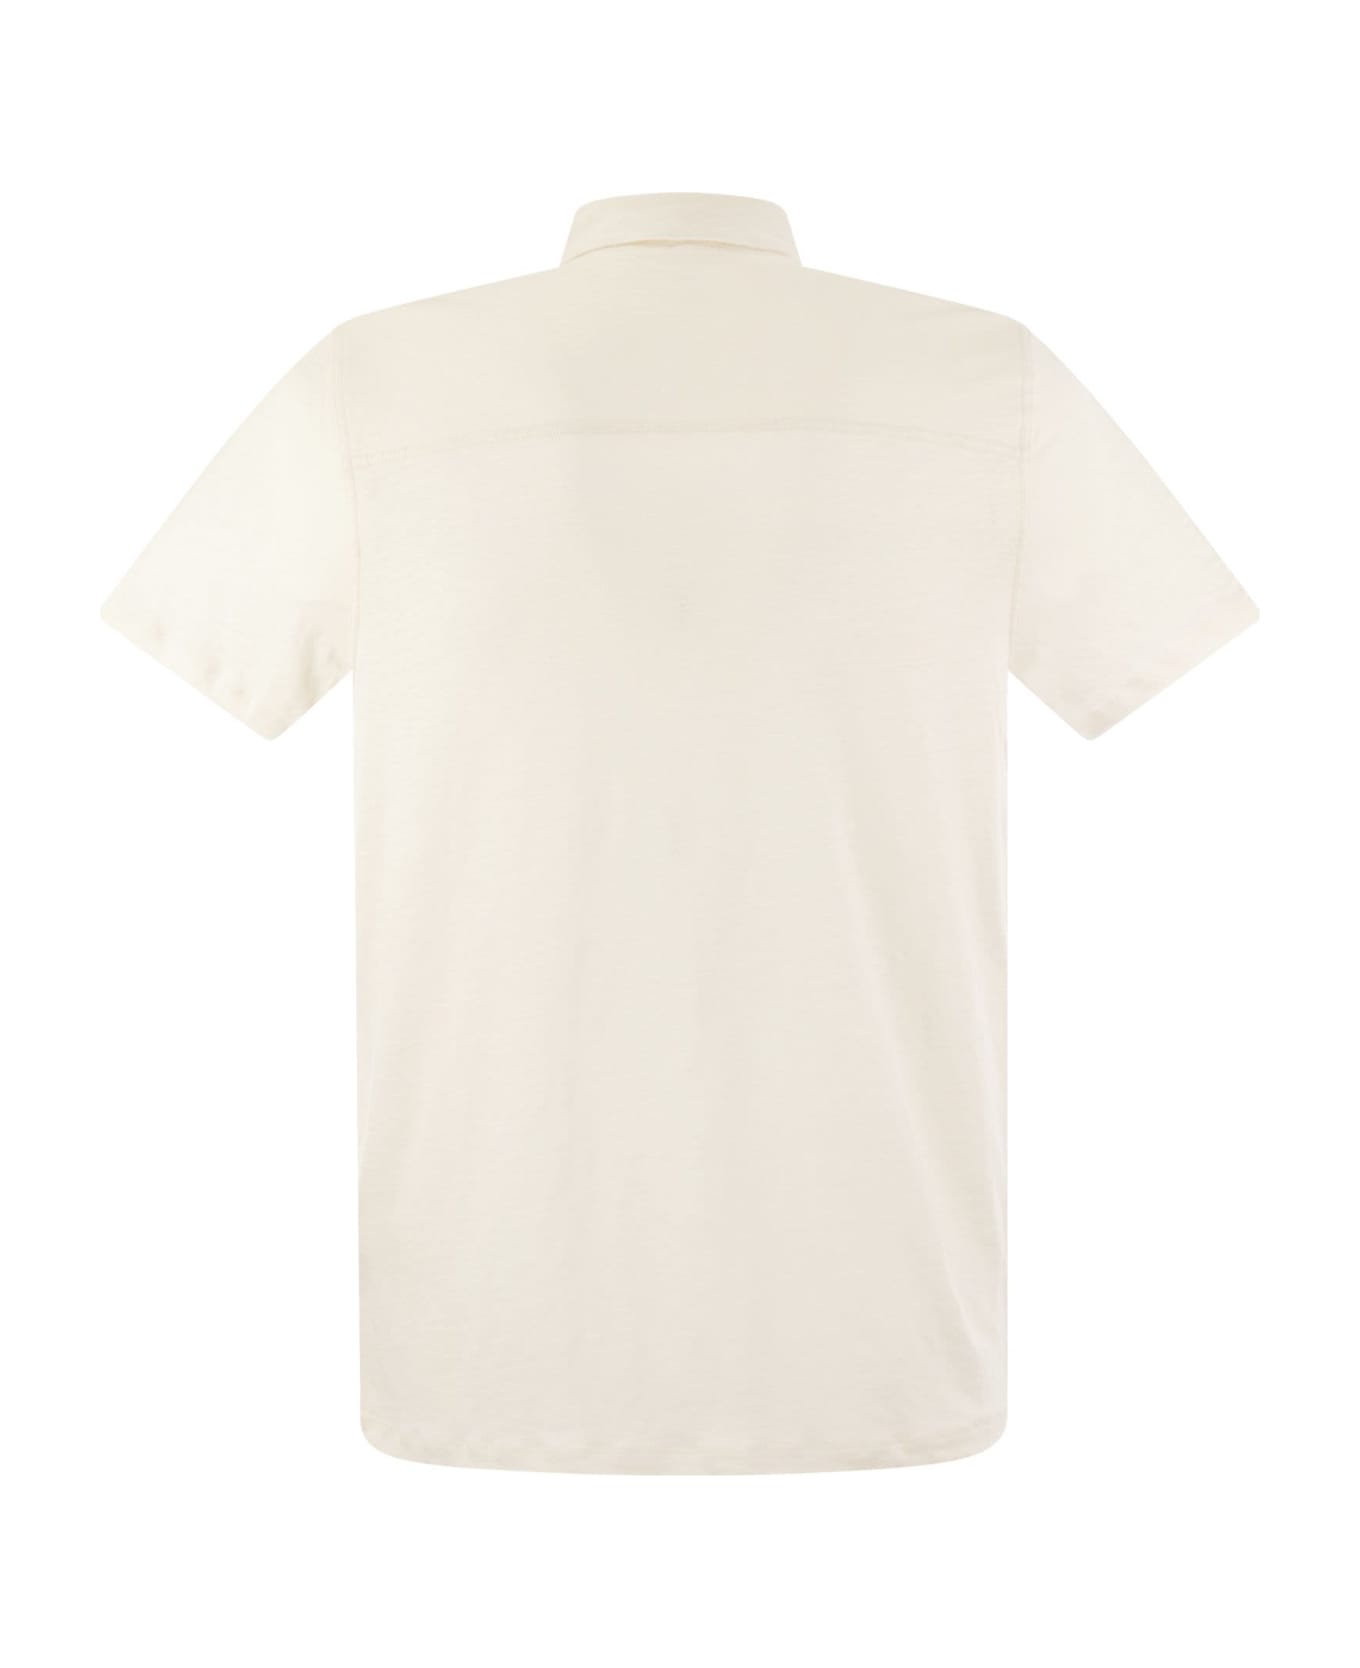 Majestic Filatures Linen Short-sleeved Polo Shirt - Cream ポロシャツ